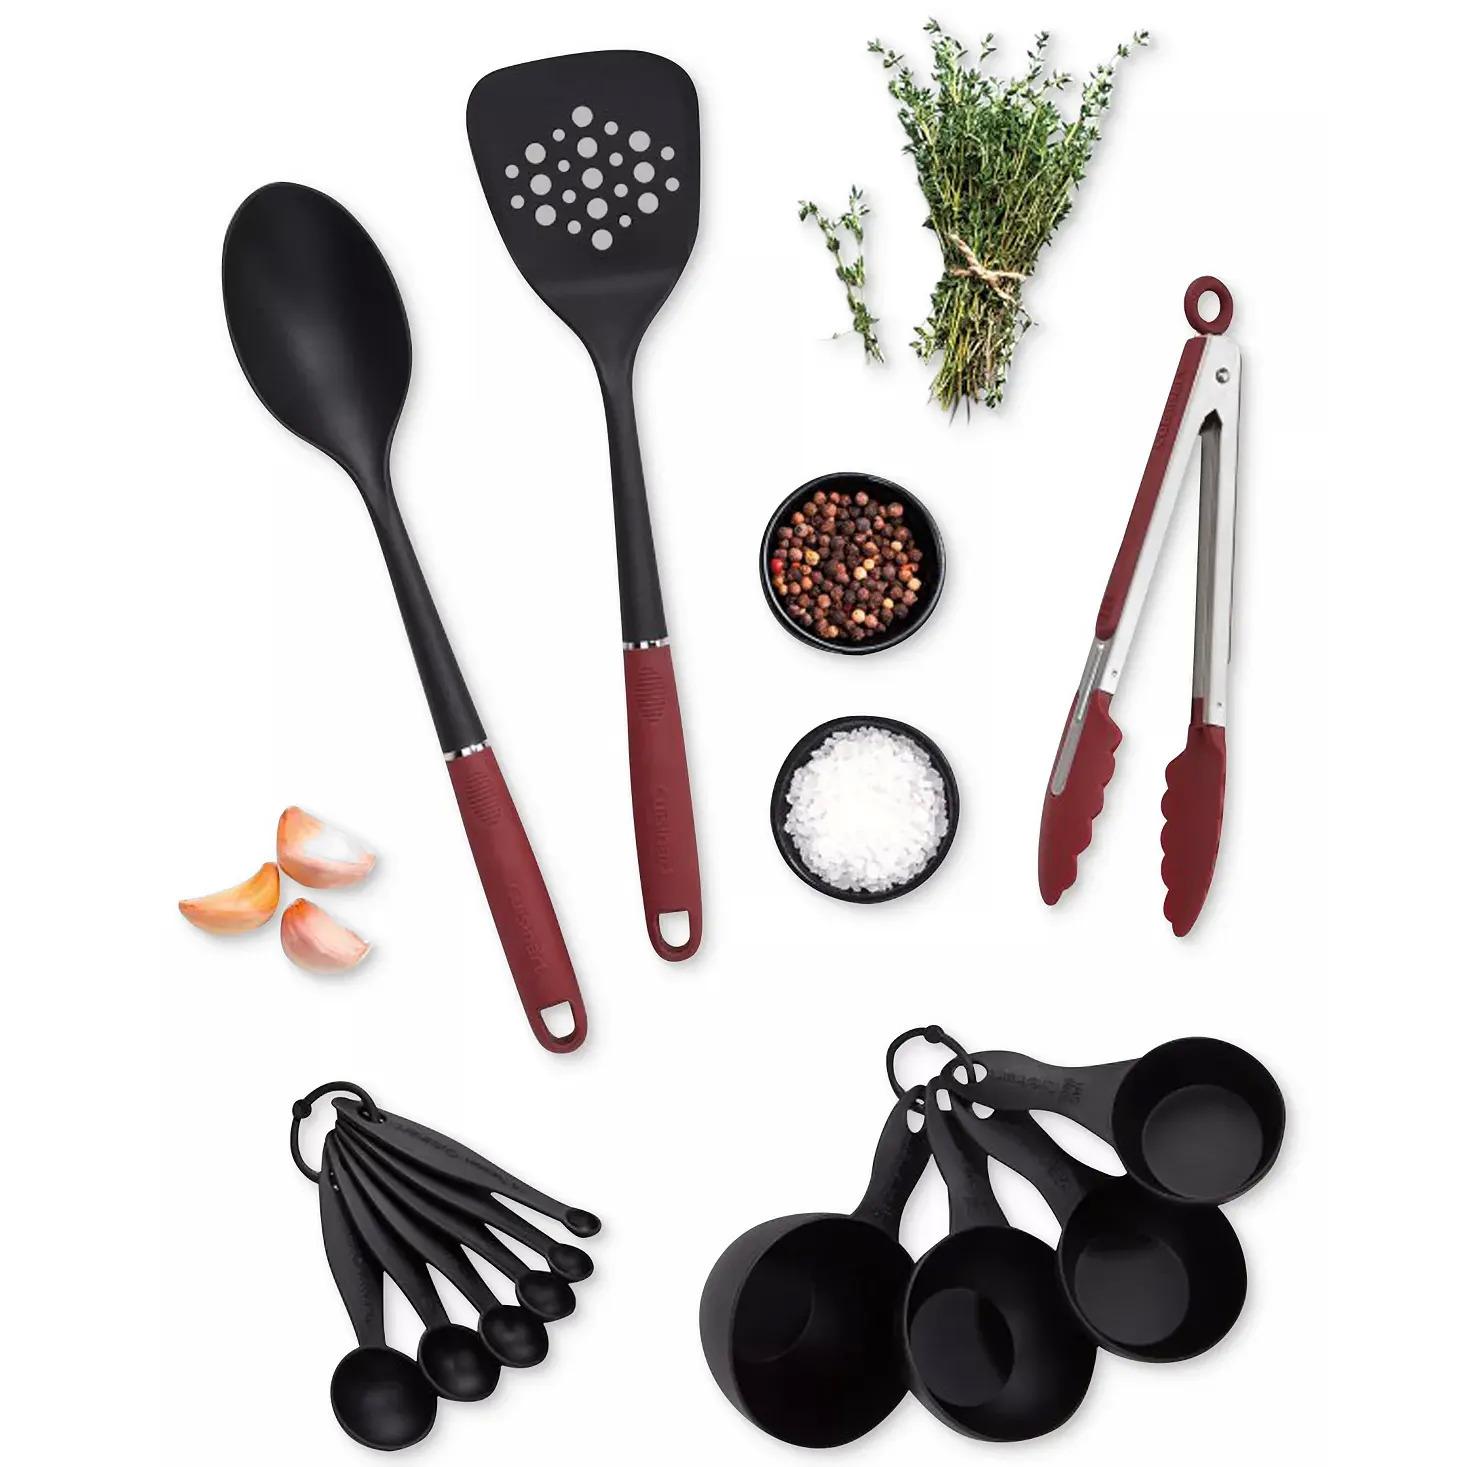 Cuisinart Kitchen Essentials Primary Tool Set for $9.76